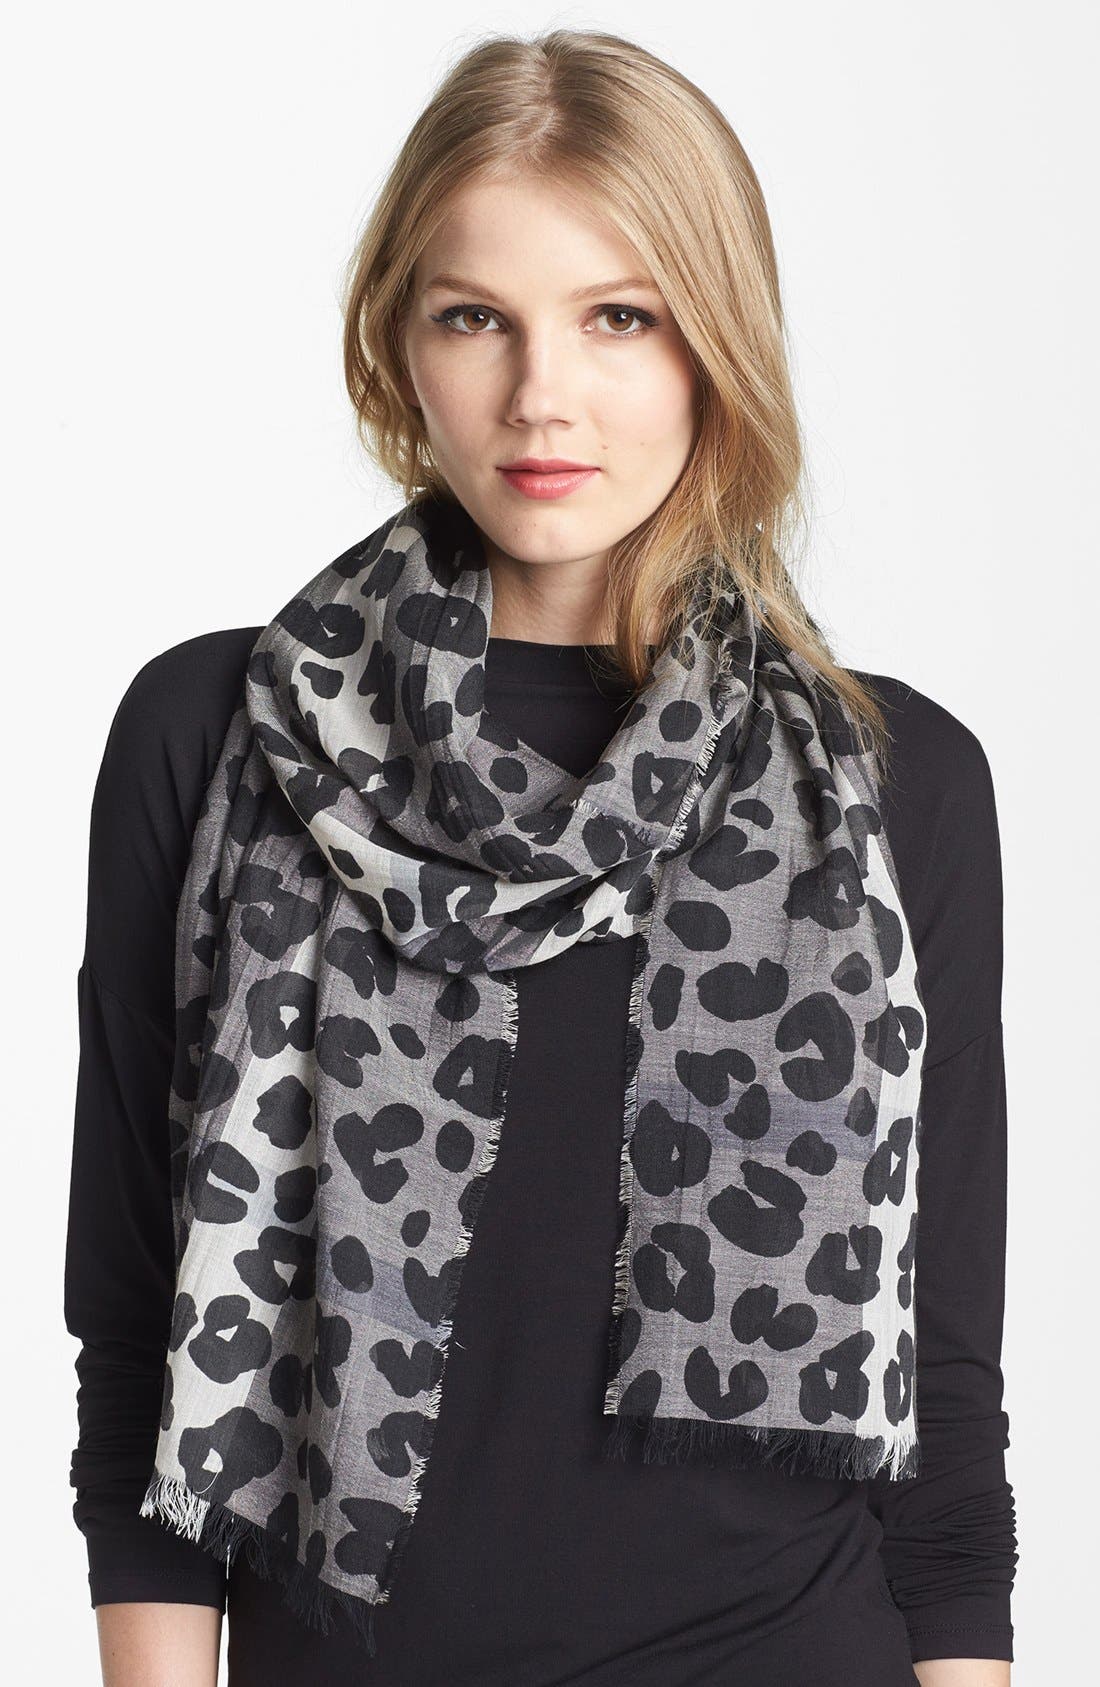 burberry animal print scarf